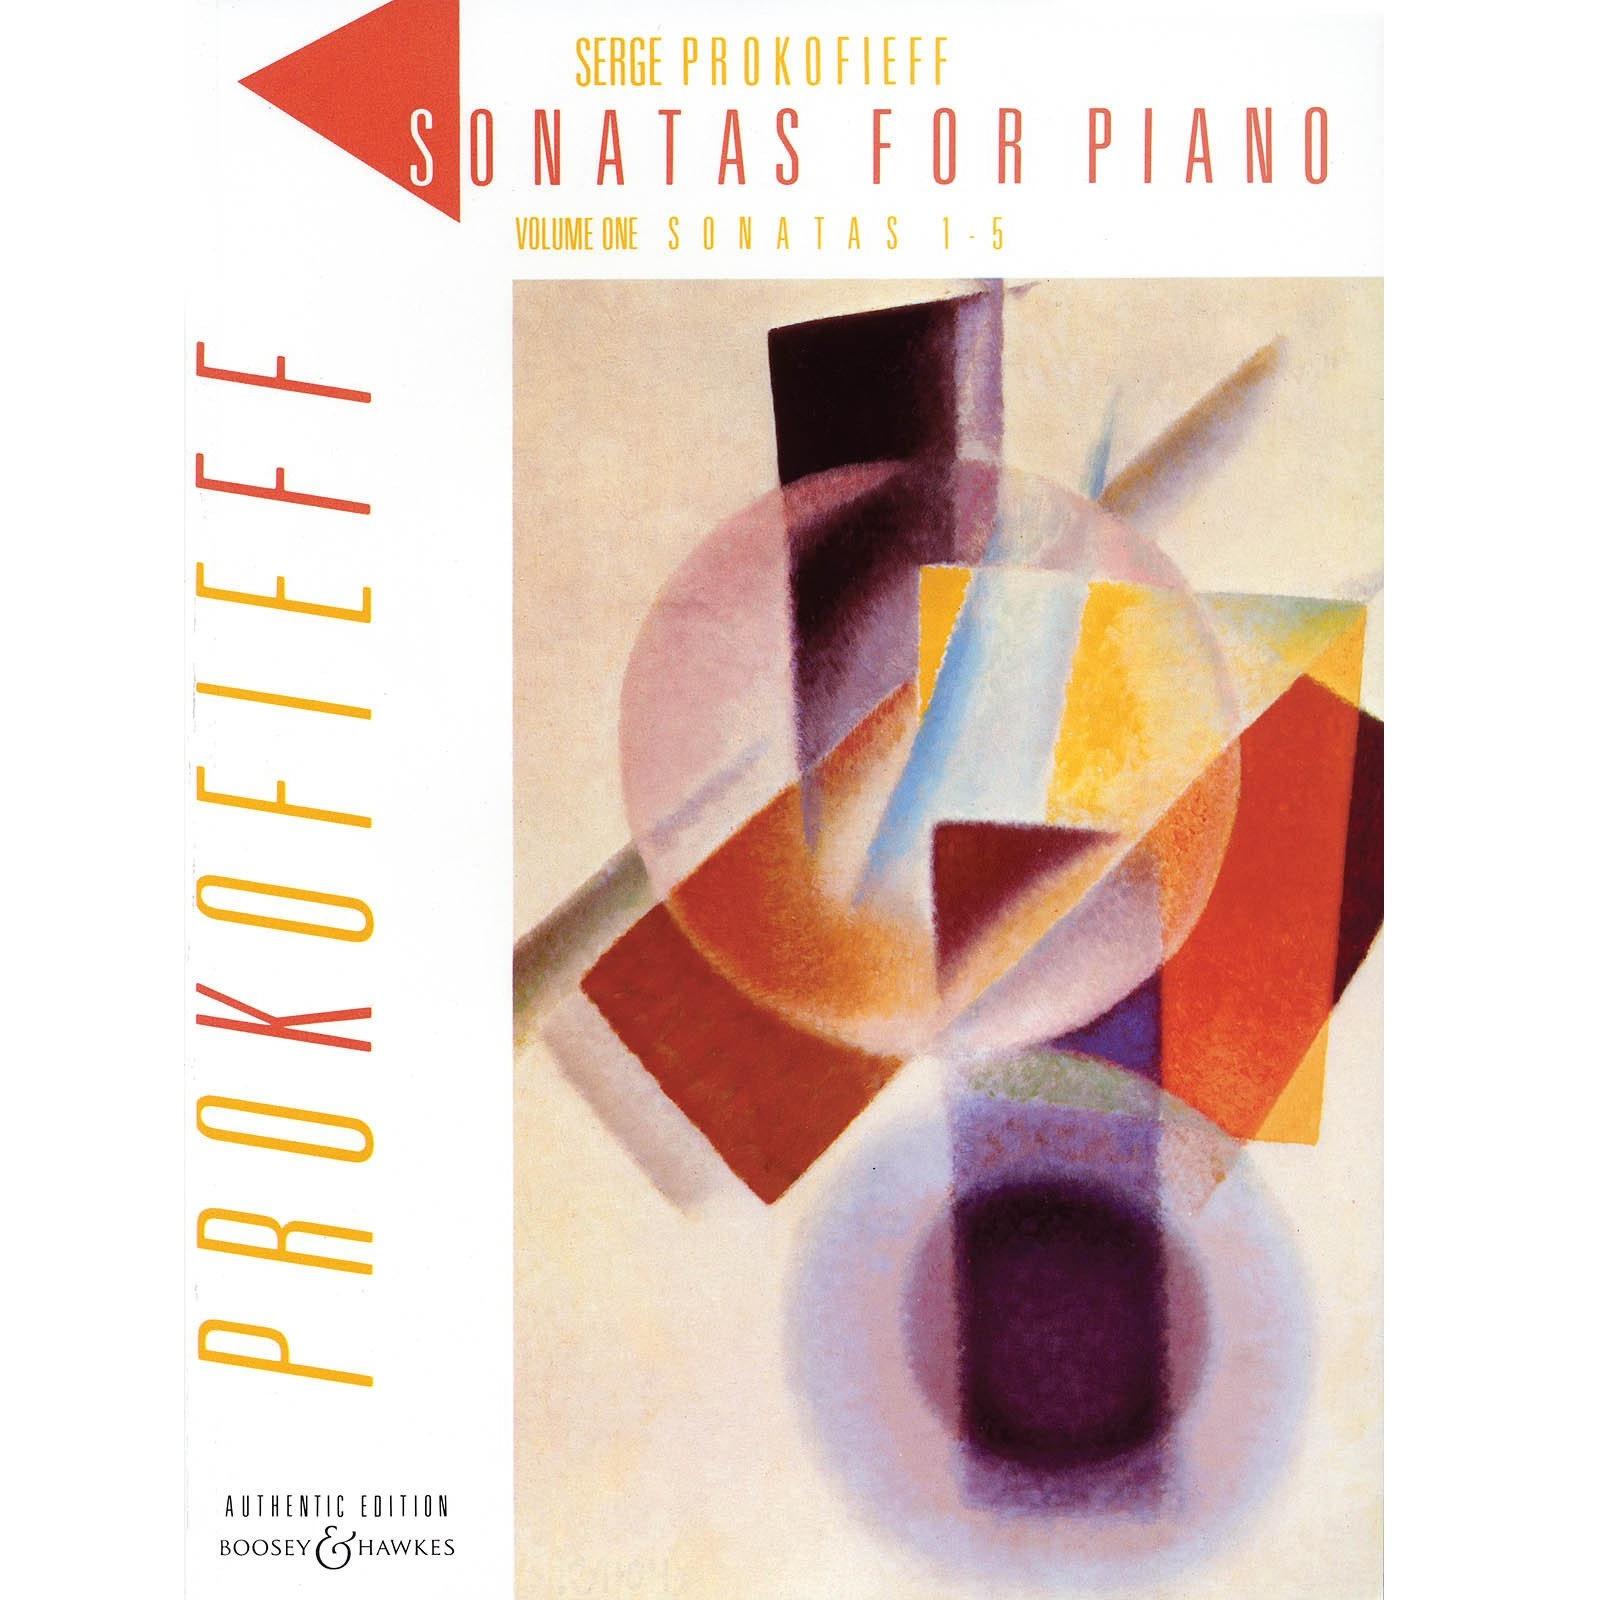 Prokofieff Sonatas For Piano Volume One Sonatas 1-5 - Authentic Edition Boosey Hawkes